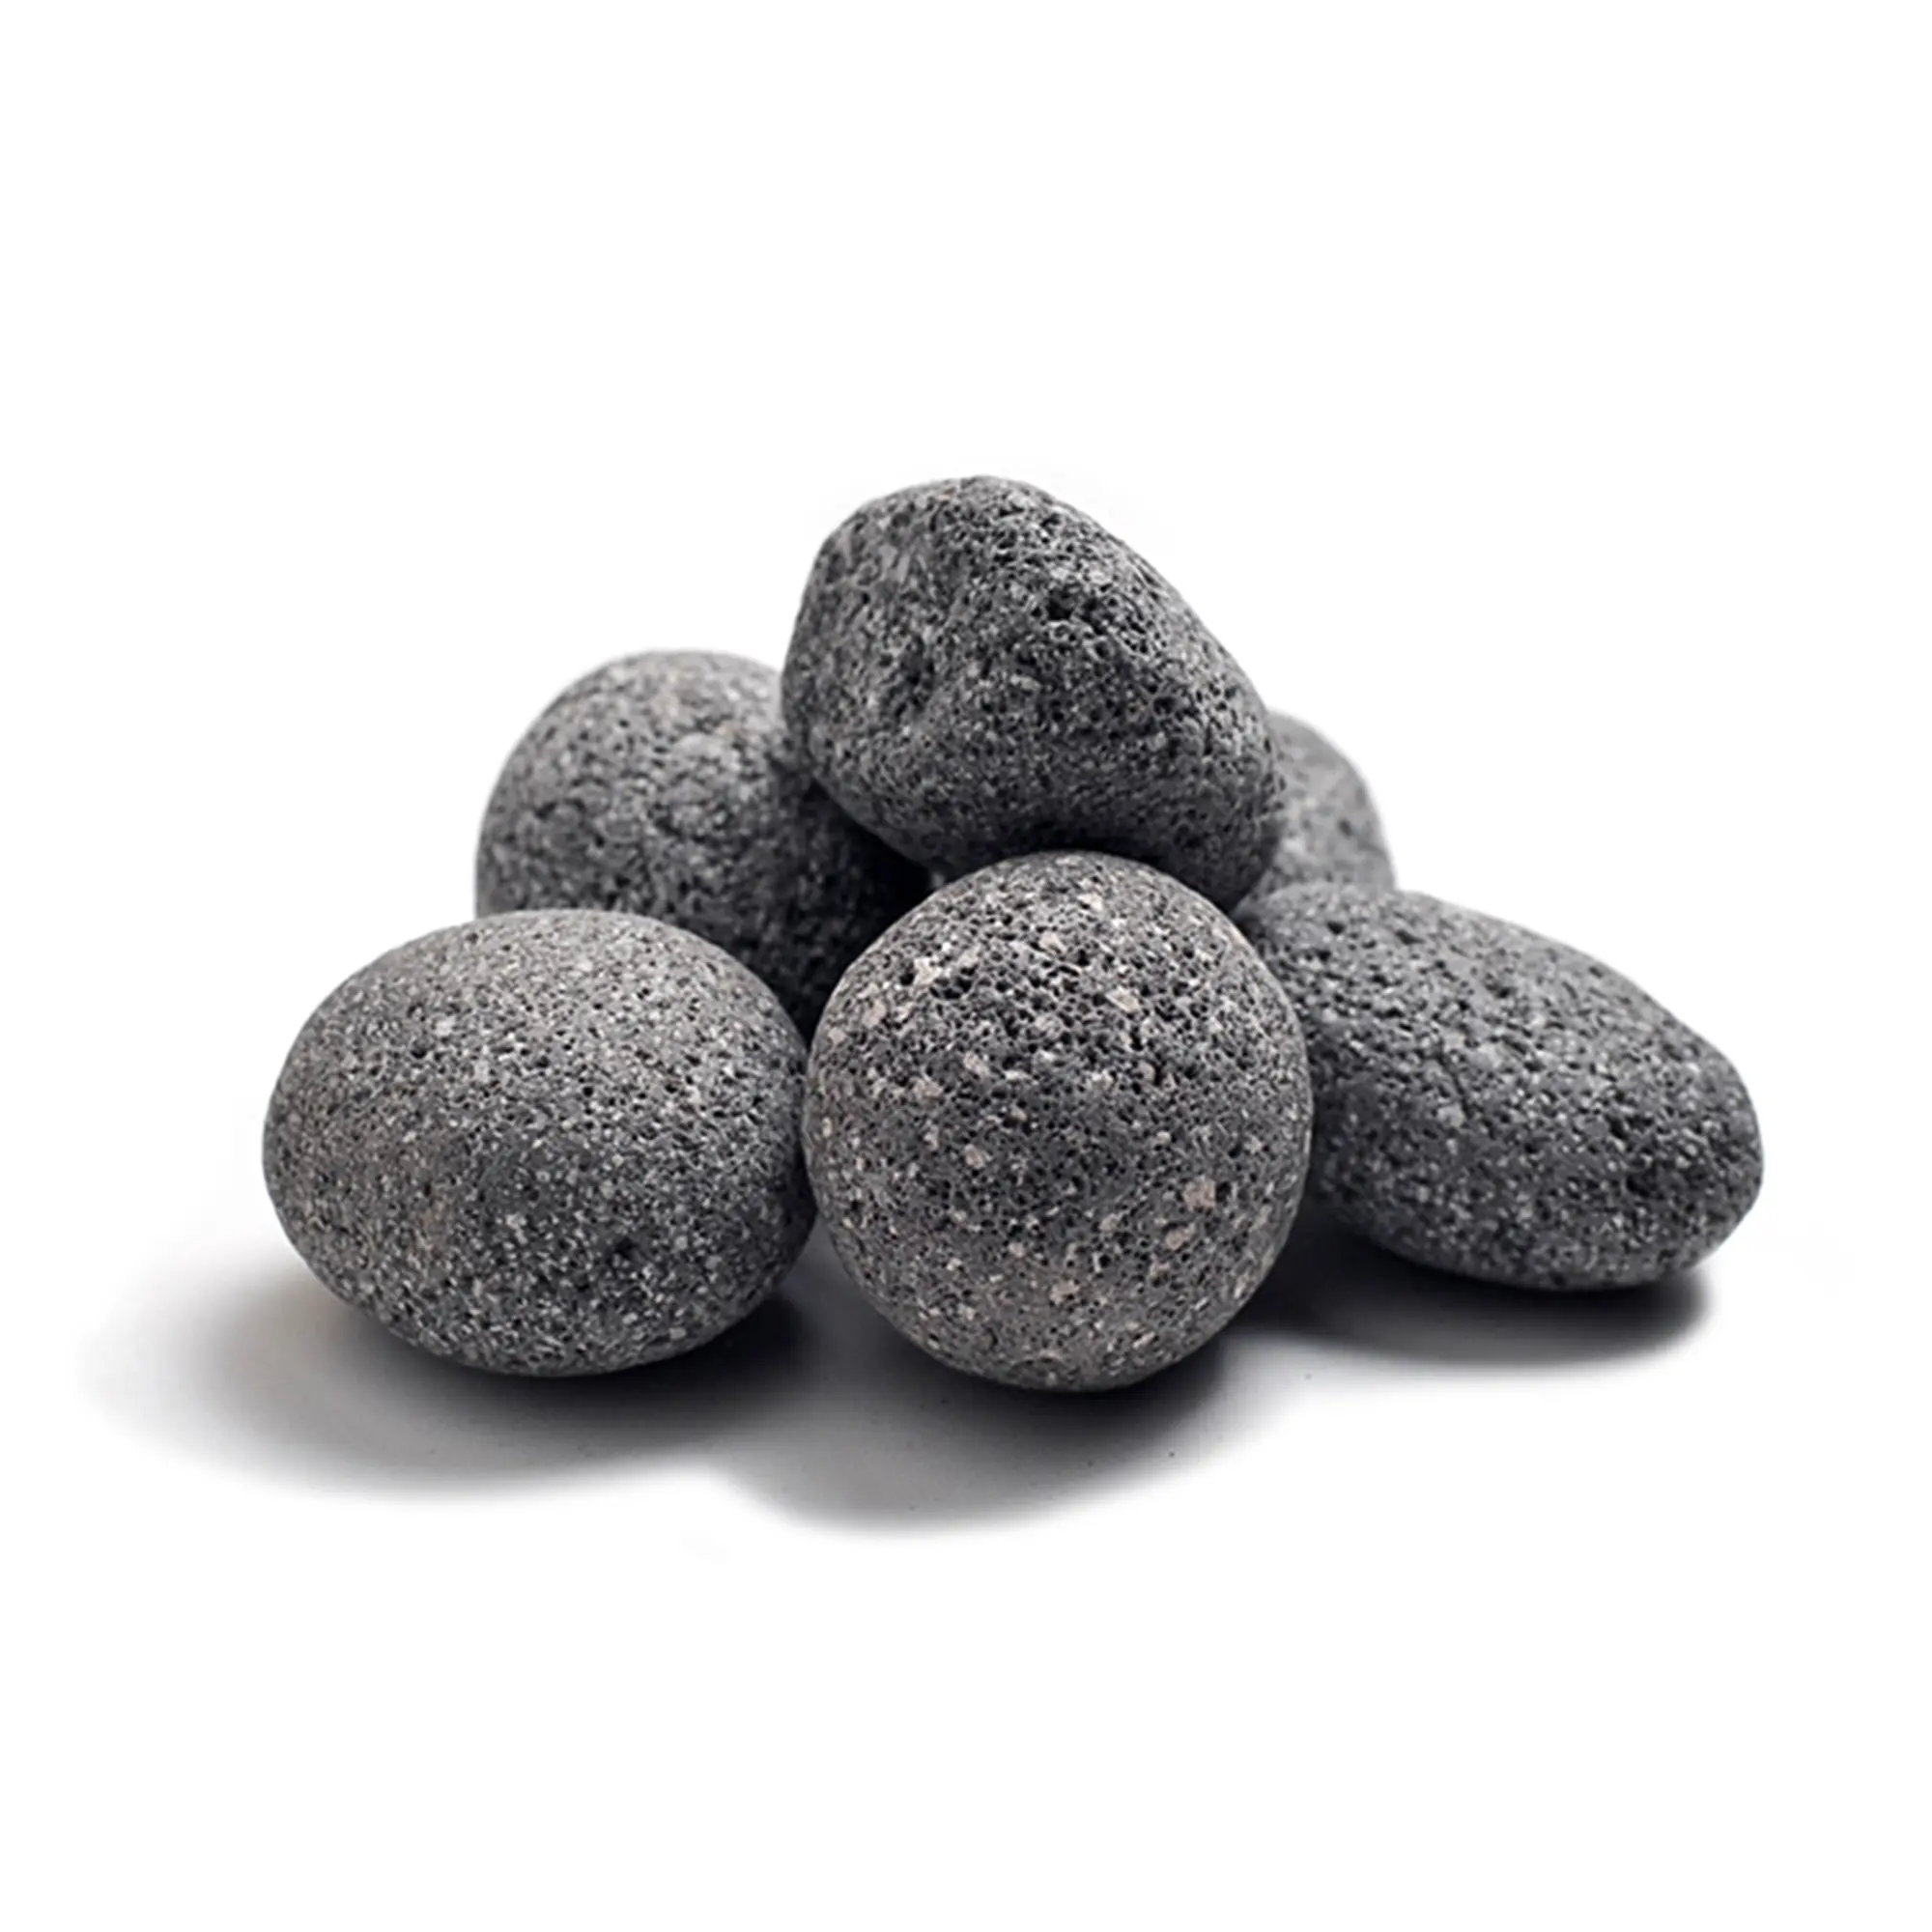 Hot season natural black lava pebble stone for home & garden